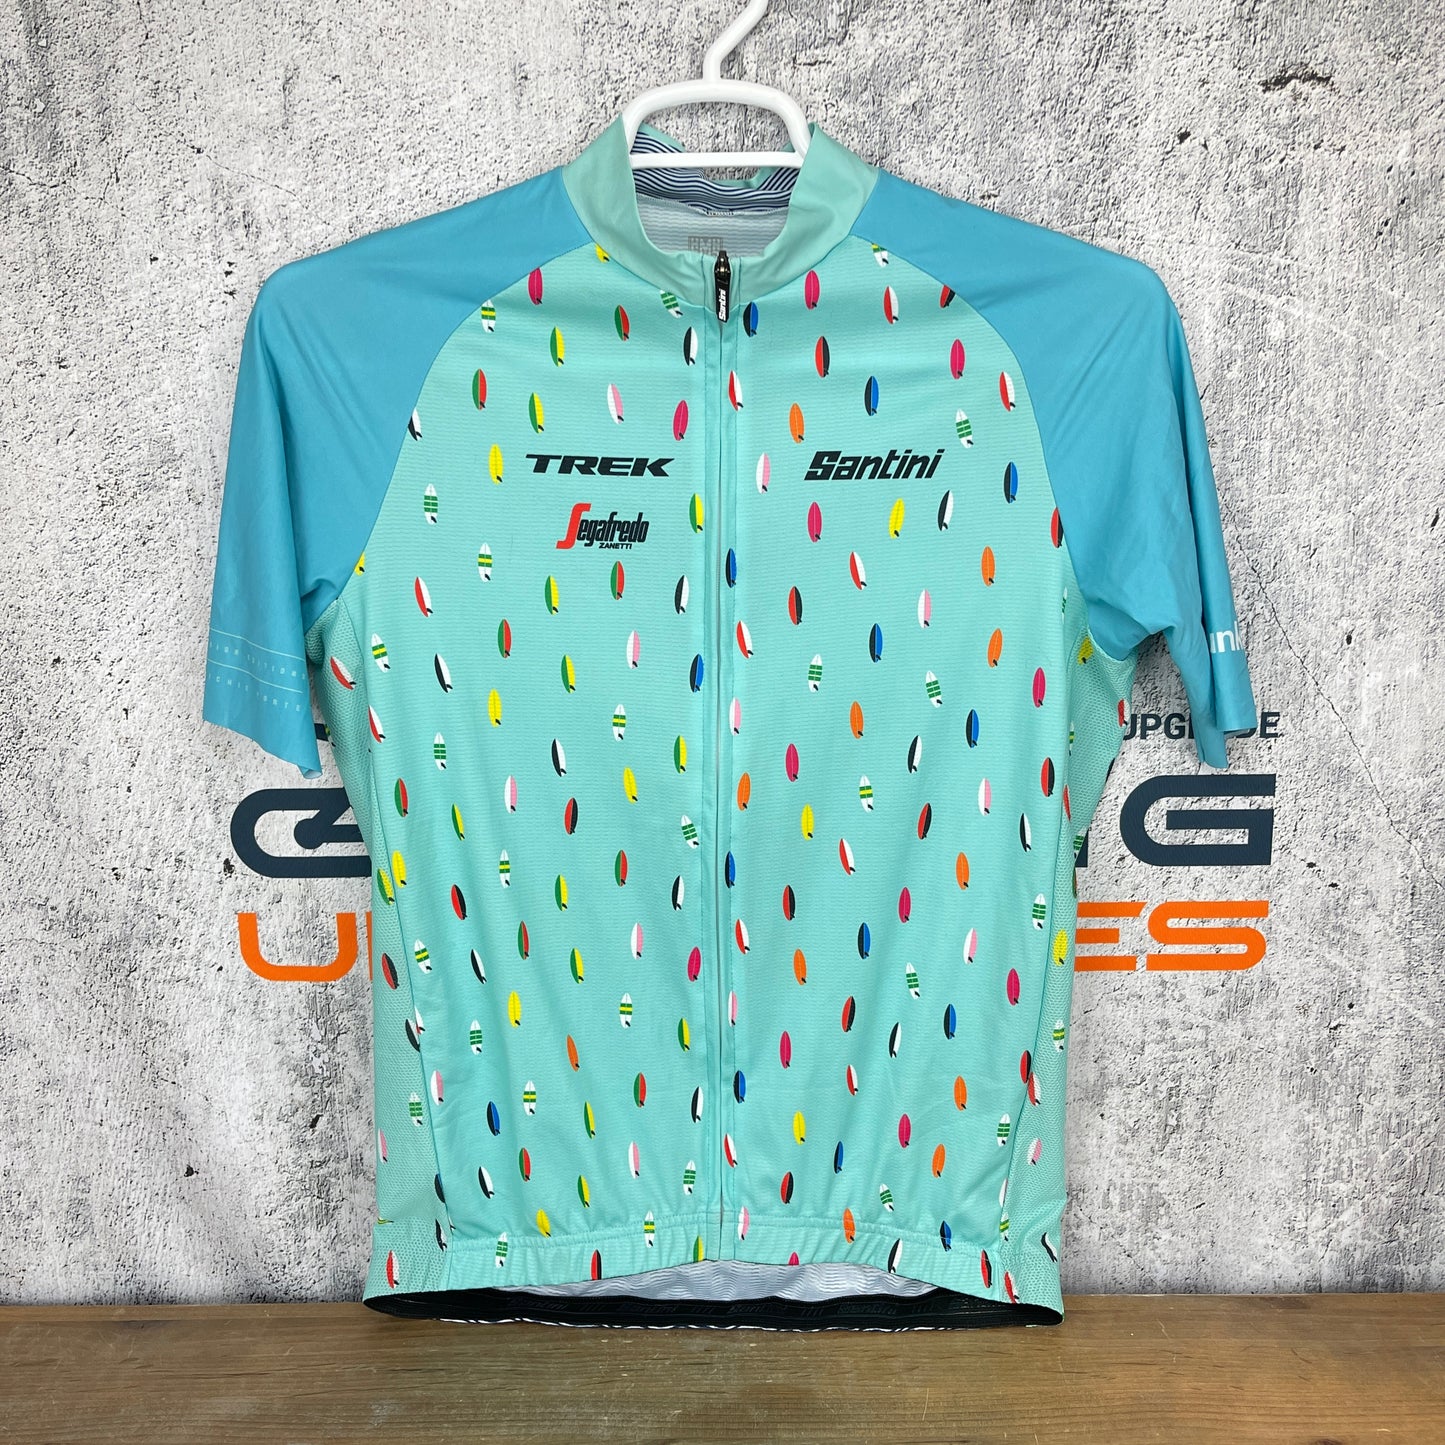 SMS Santini Trek Segafredo Zanetti Men's XL Short Sleeve Cycling Jersey